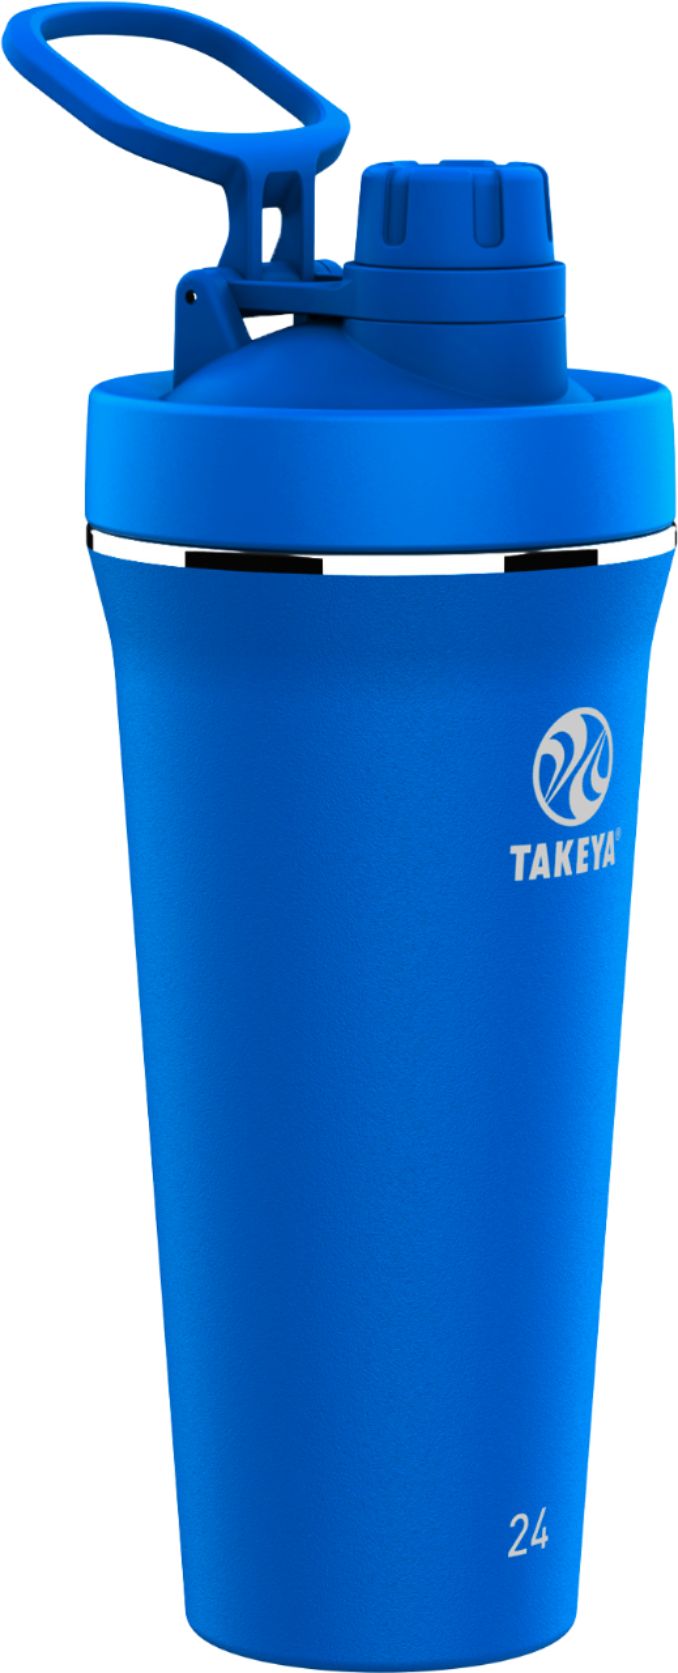 Takeya 24oz Chill-Lock Insulated Steel Protein Shaker